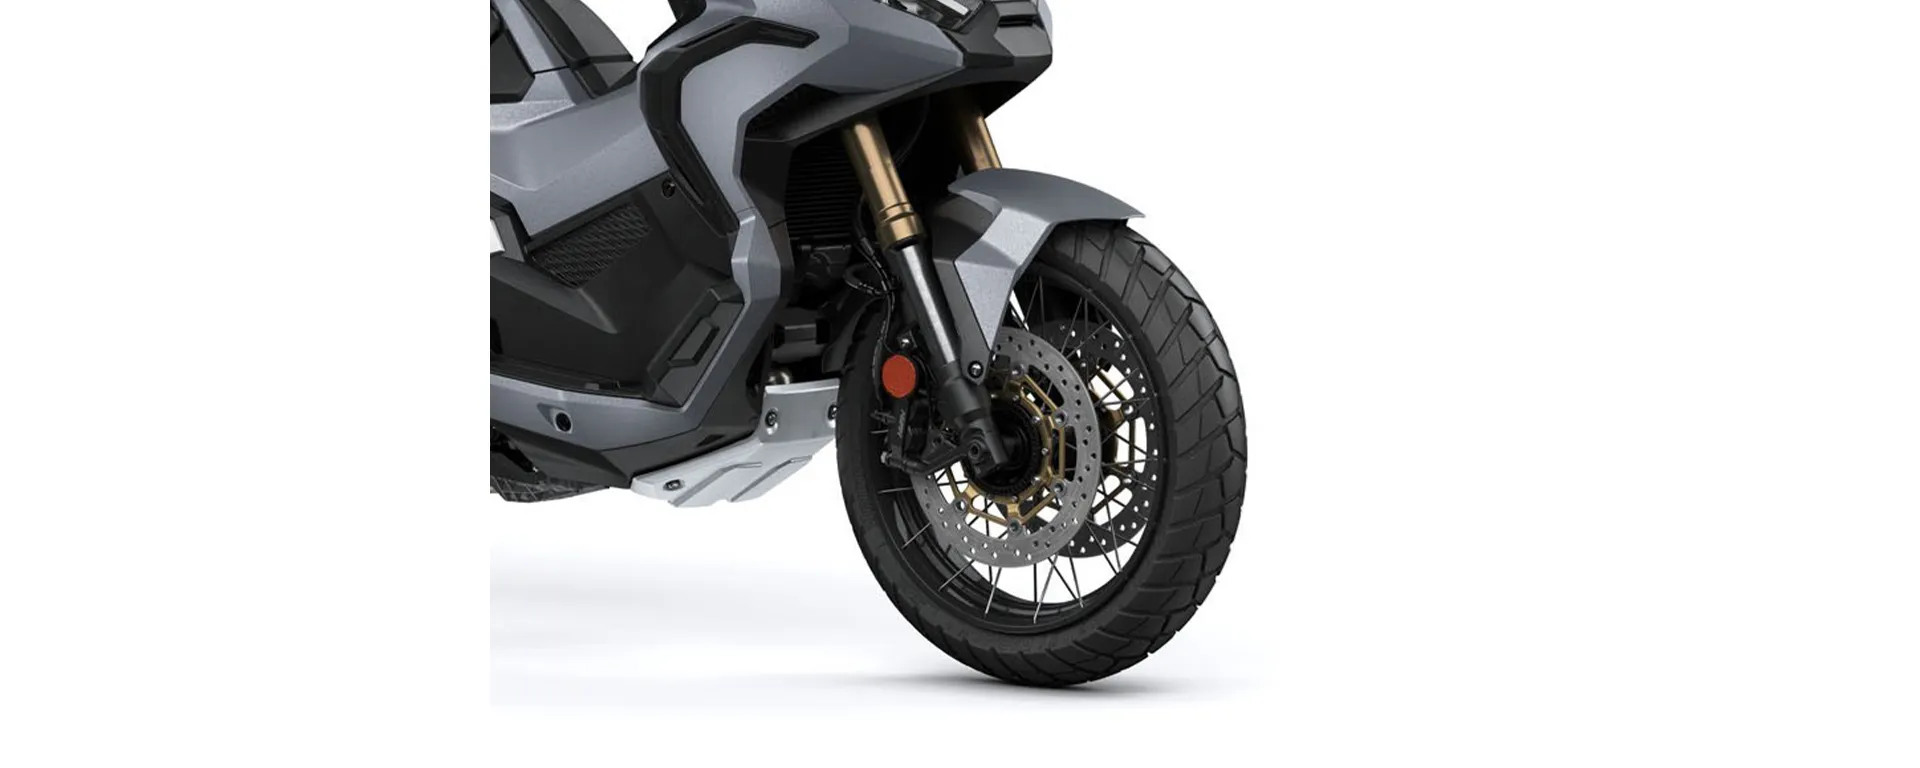 Pneus e Rodas raiadas da Moto Honda X-ADV Cinza Fosco